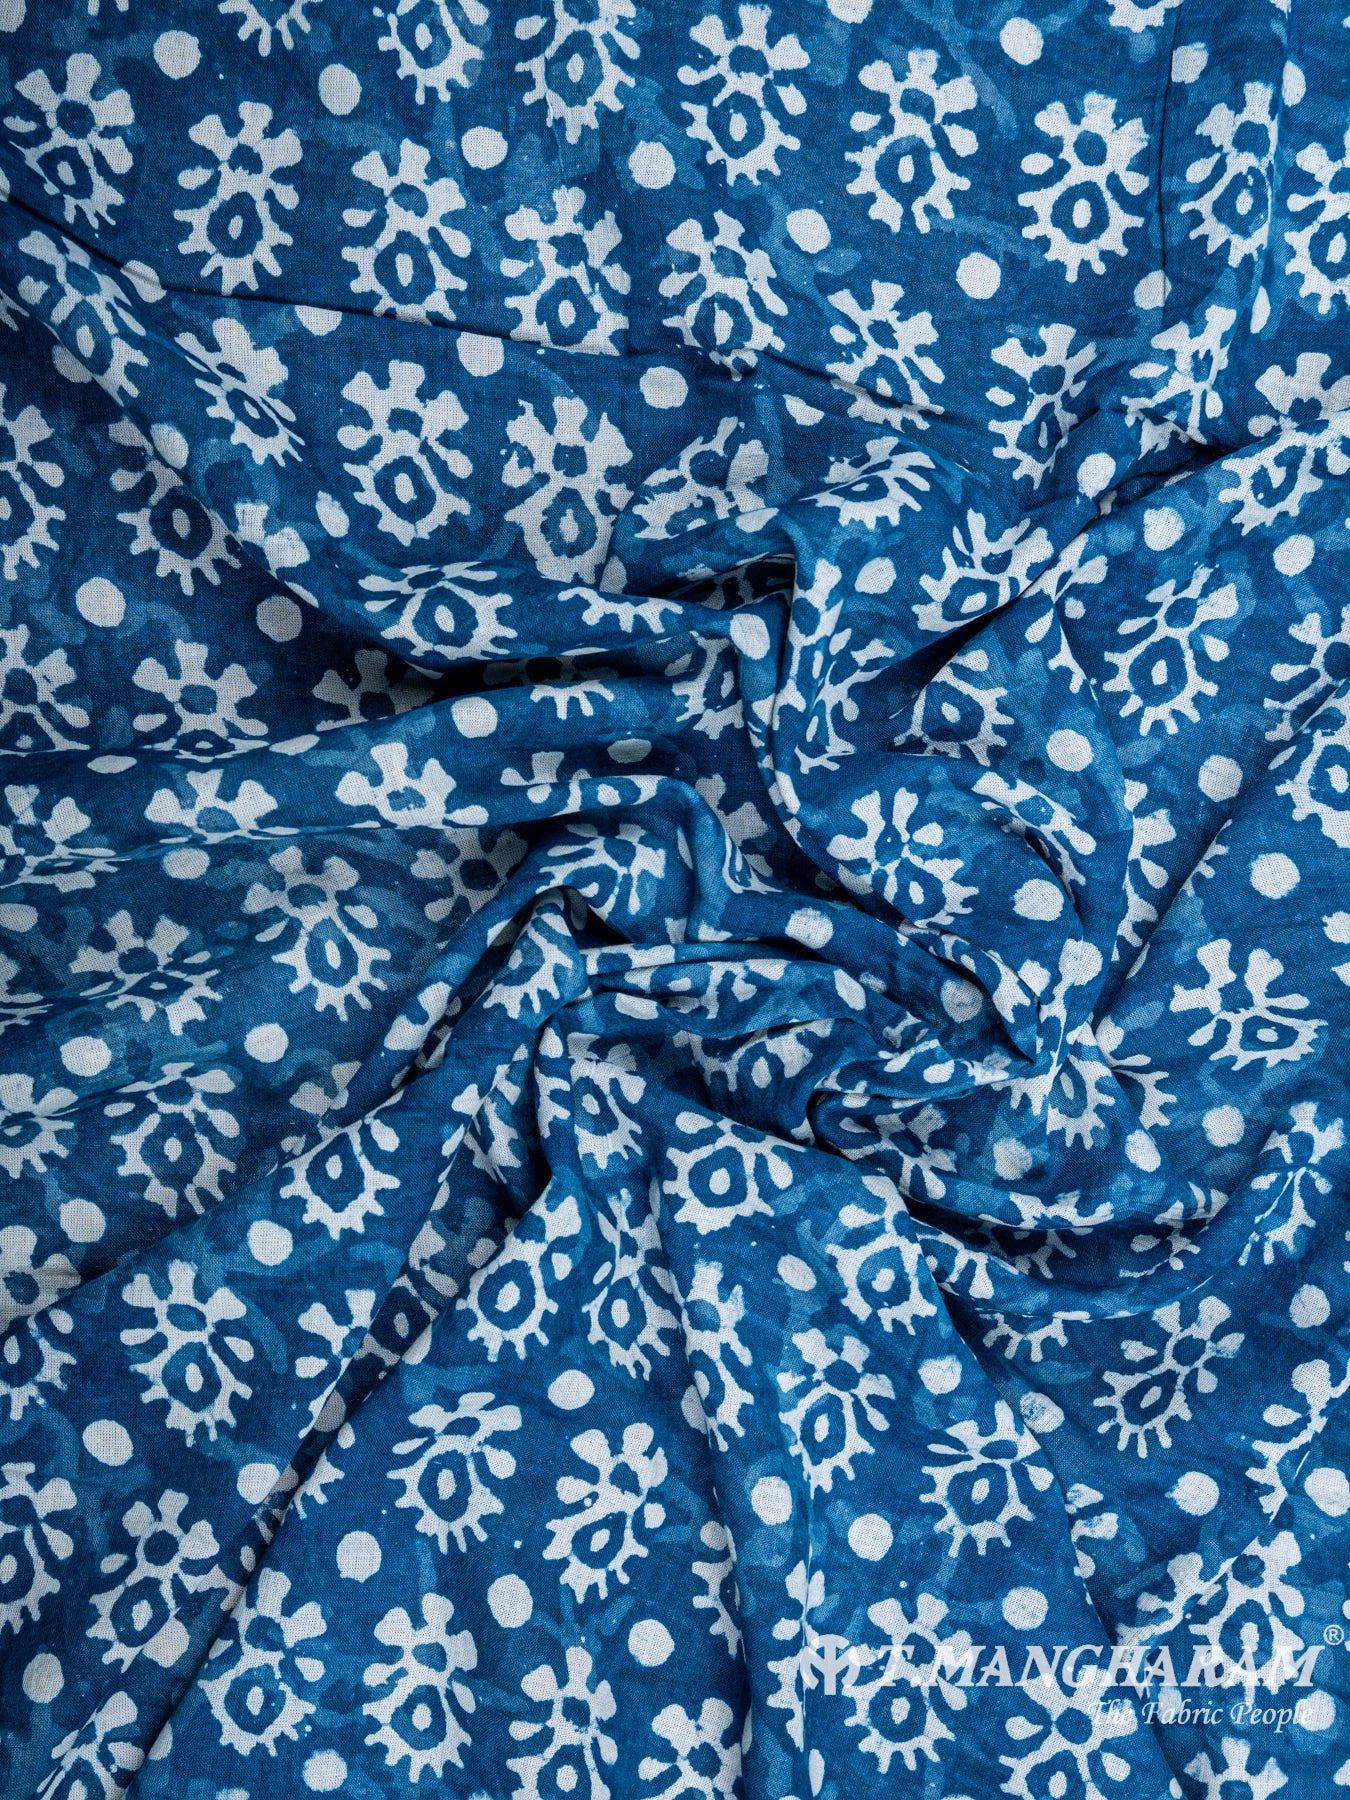 Blue Cotton Ikat Print Fabric - EC5654 view-4